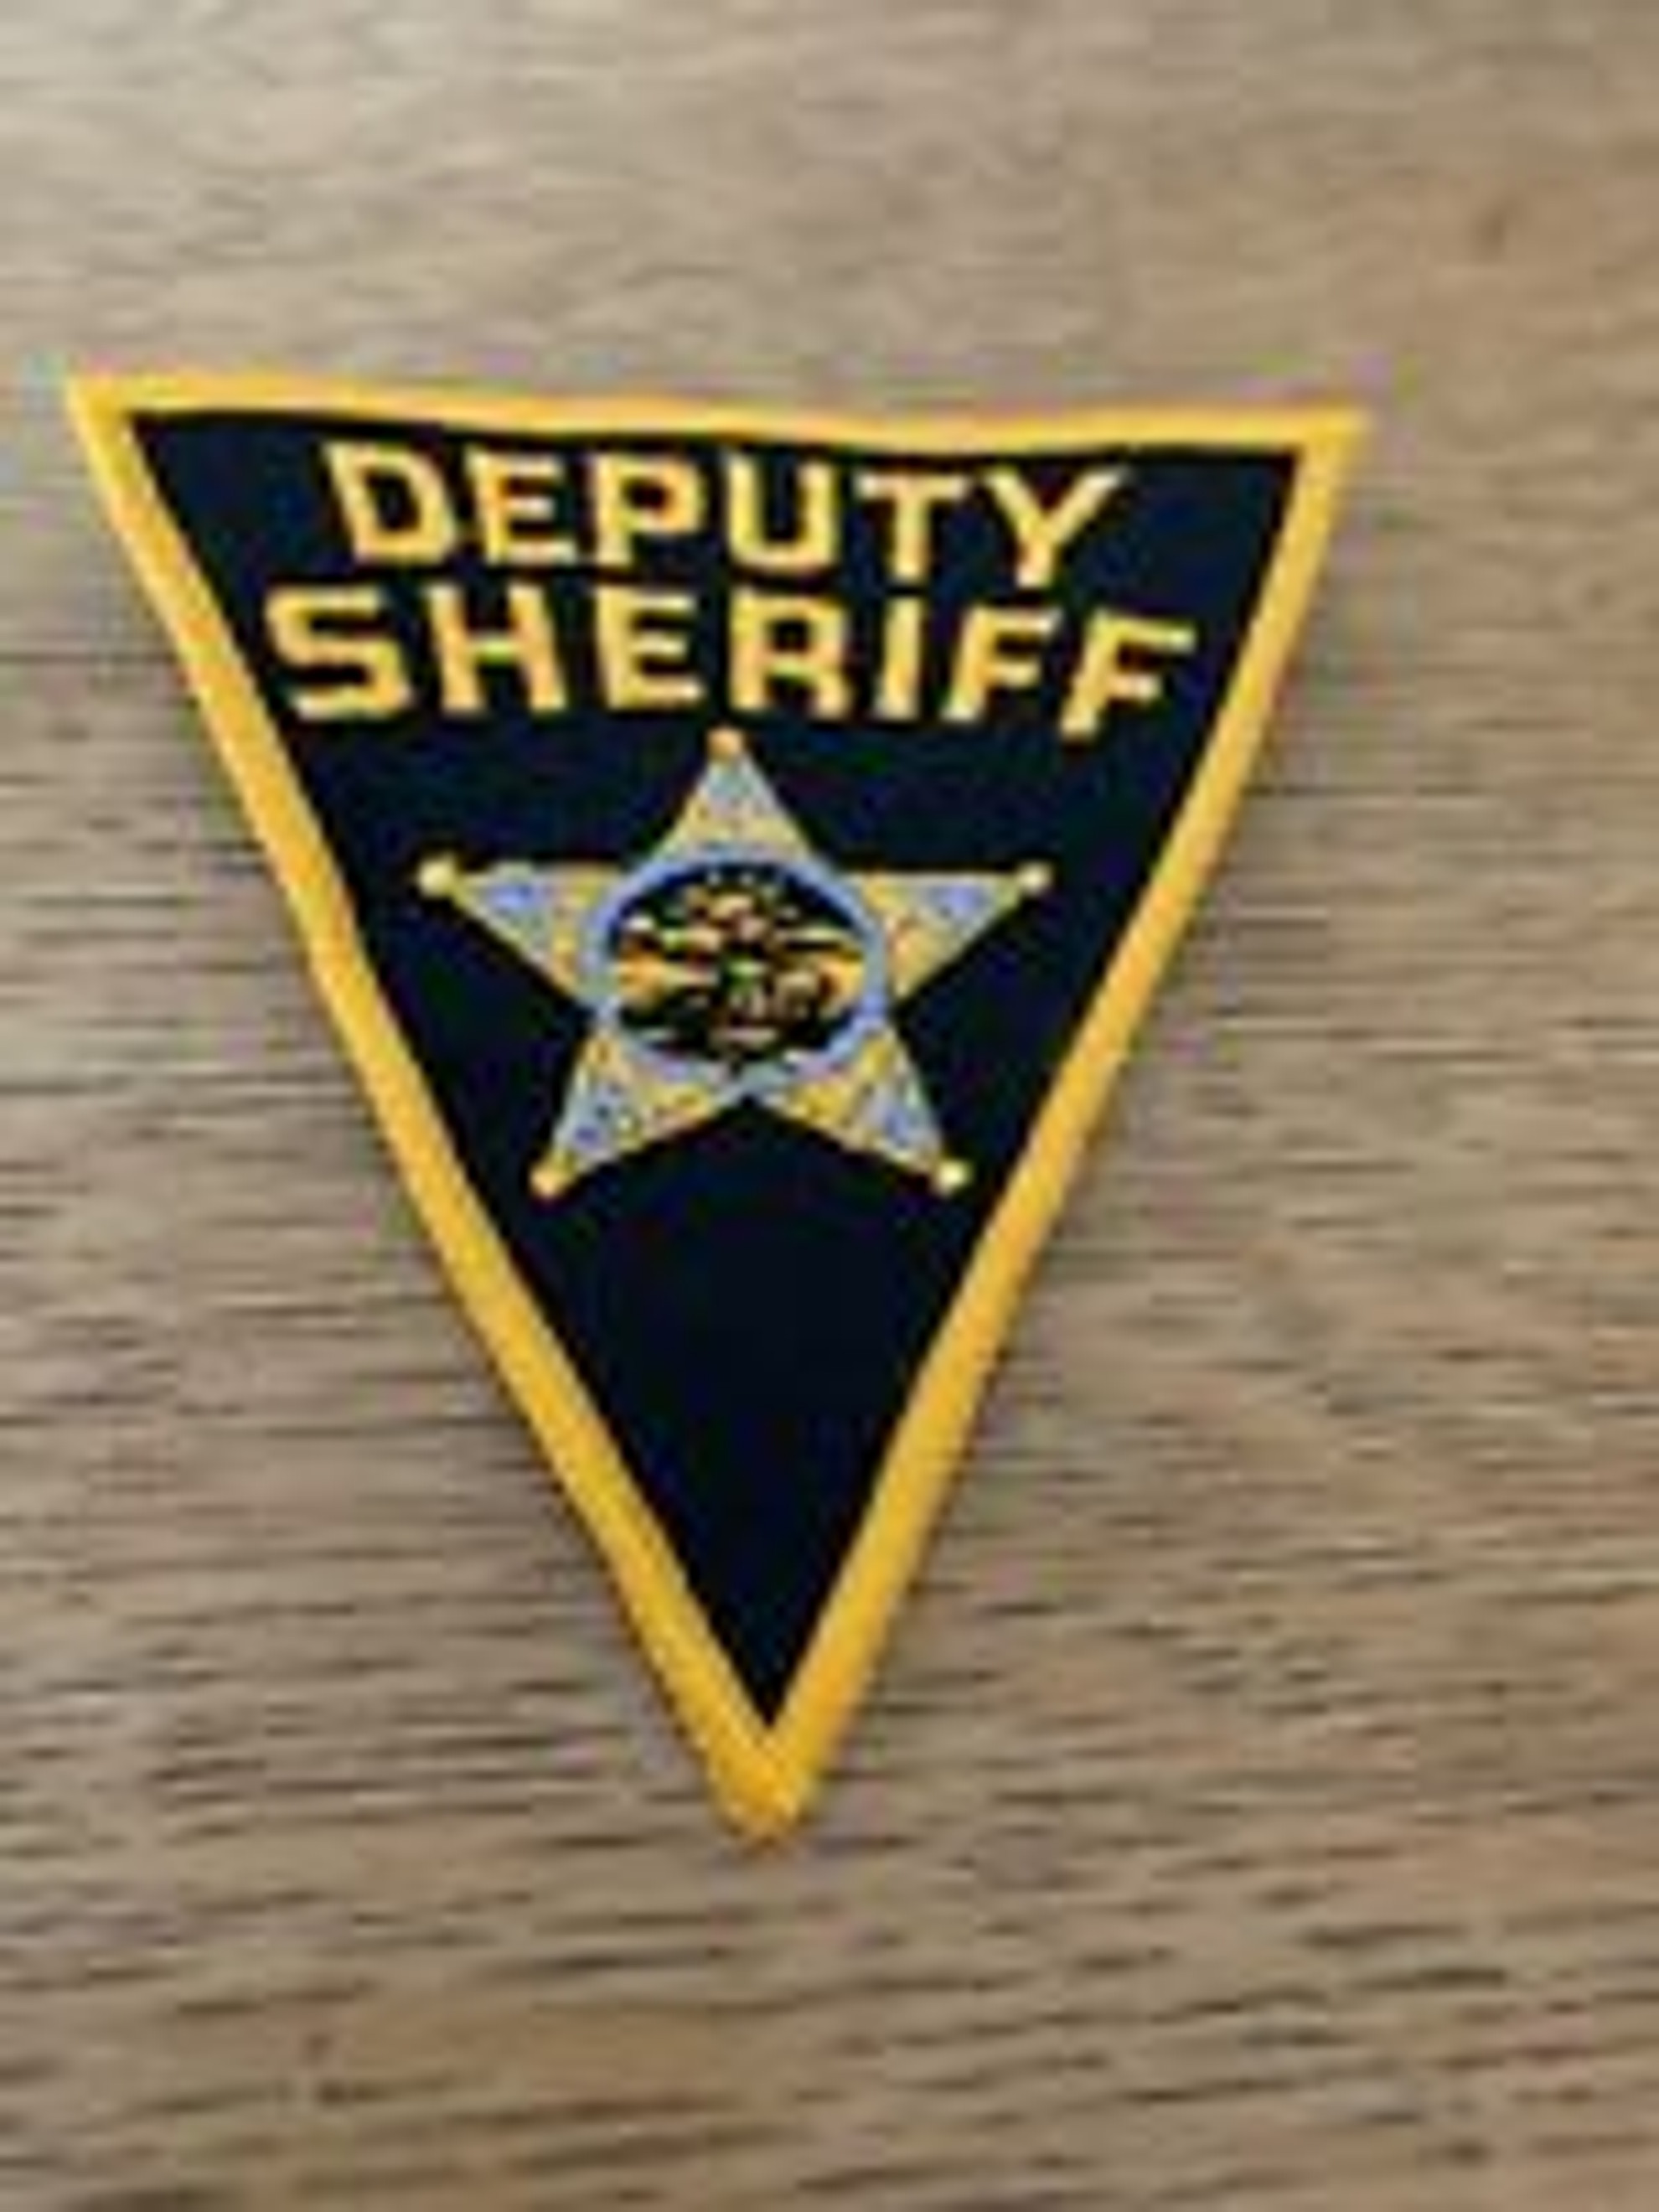 Deputy Sheriff OH Triangle Police Patch